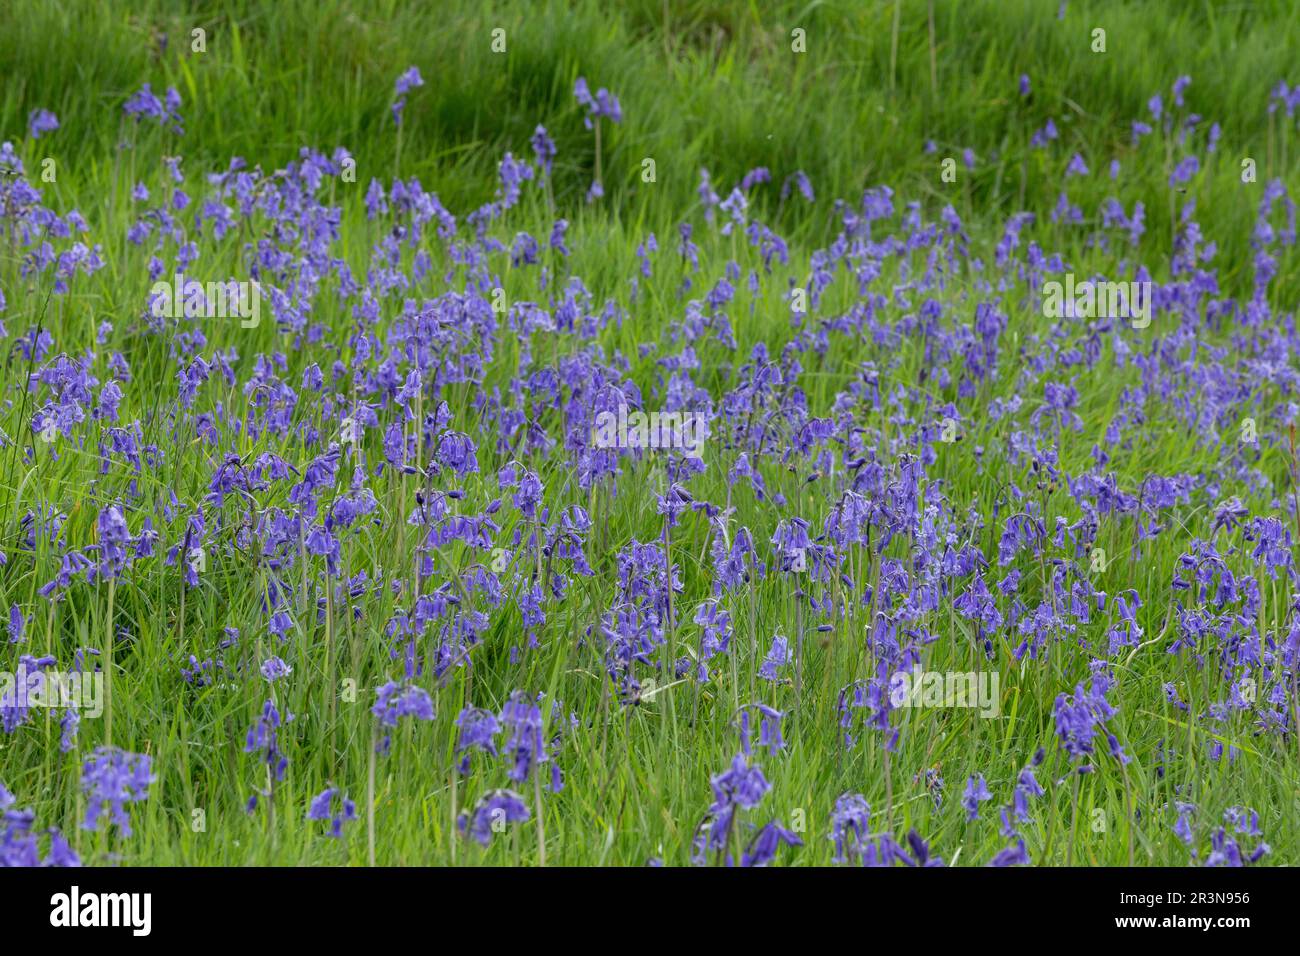 English bluebells (Hyacinthoides non-scripta) growing in grass, Stock Photo